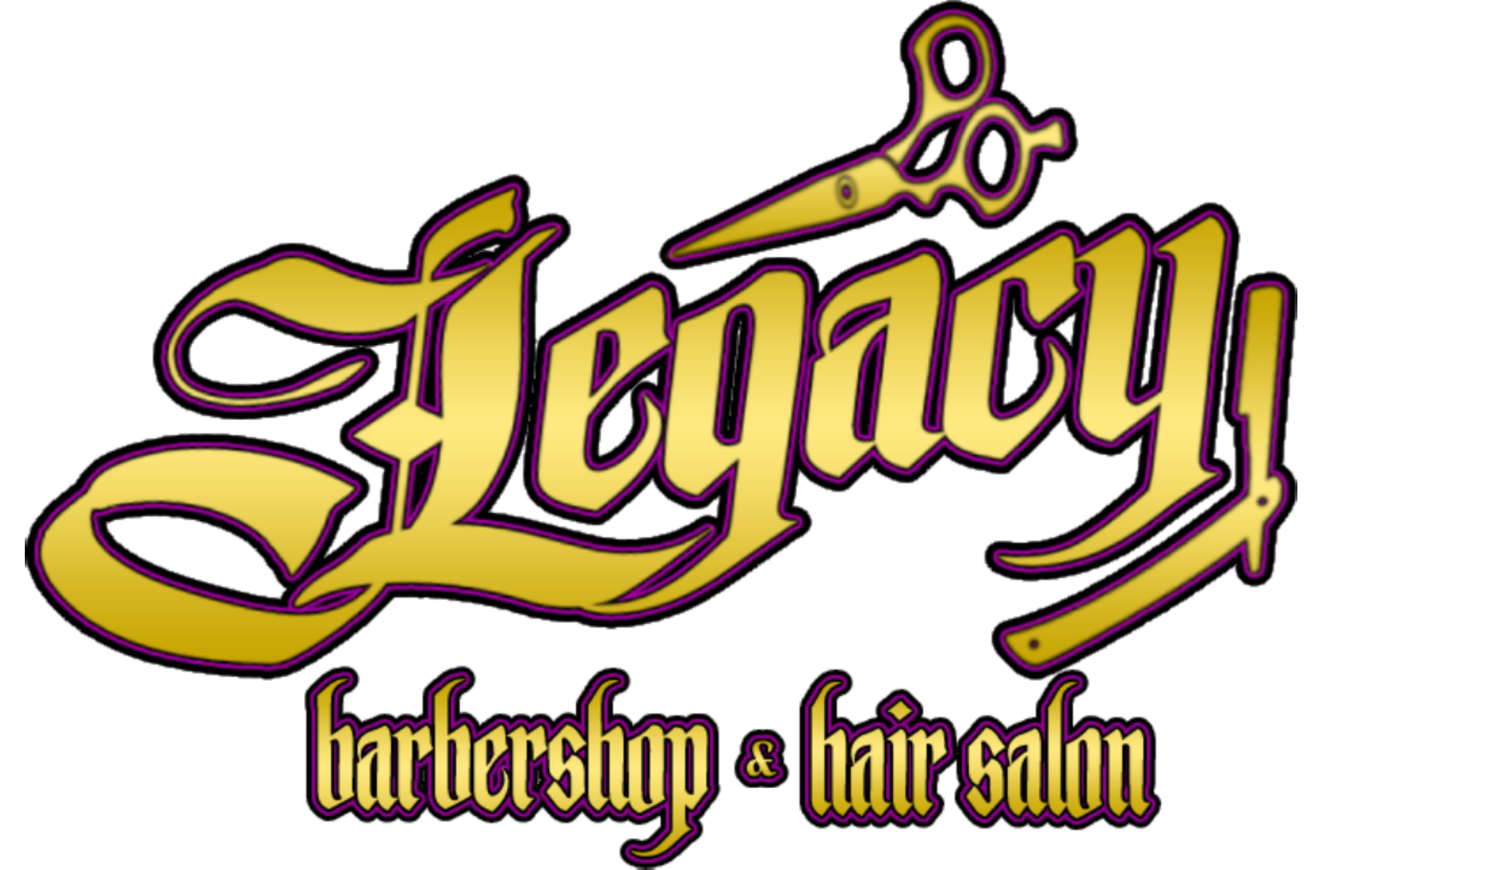 Legacy Barbershop & Hair Salon